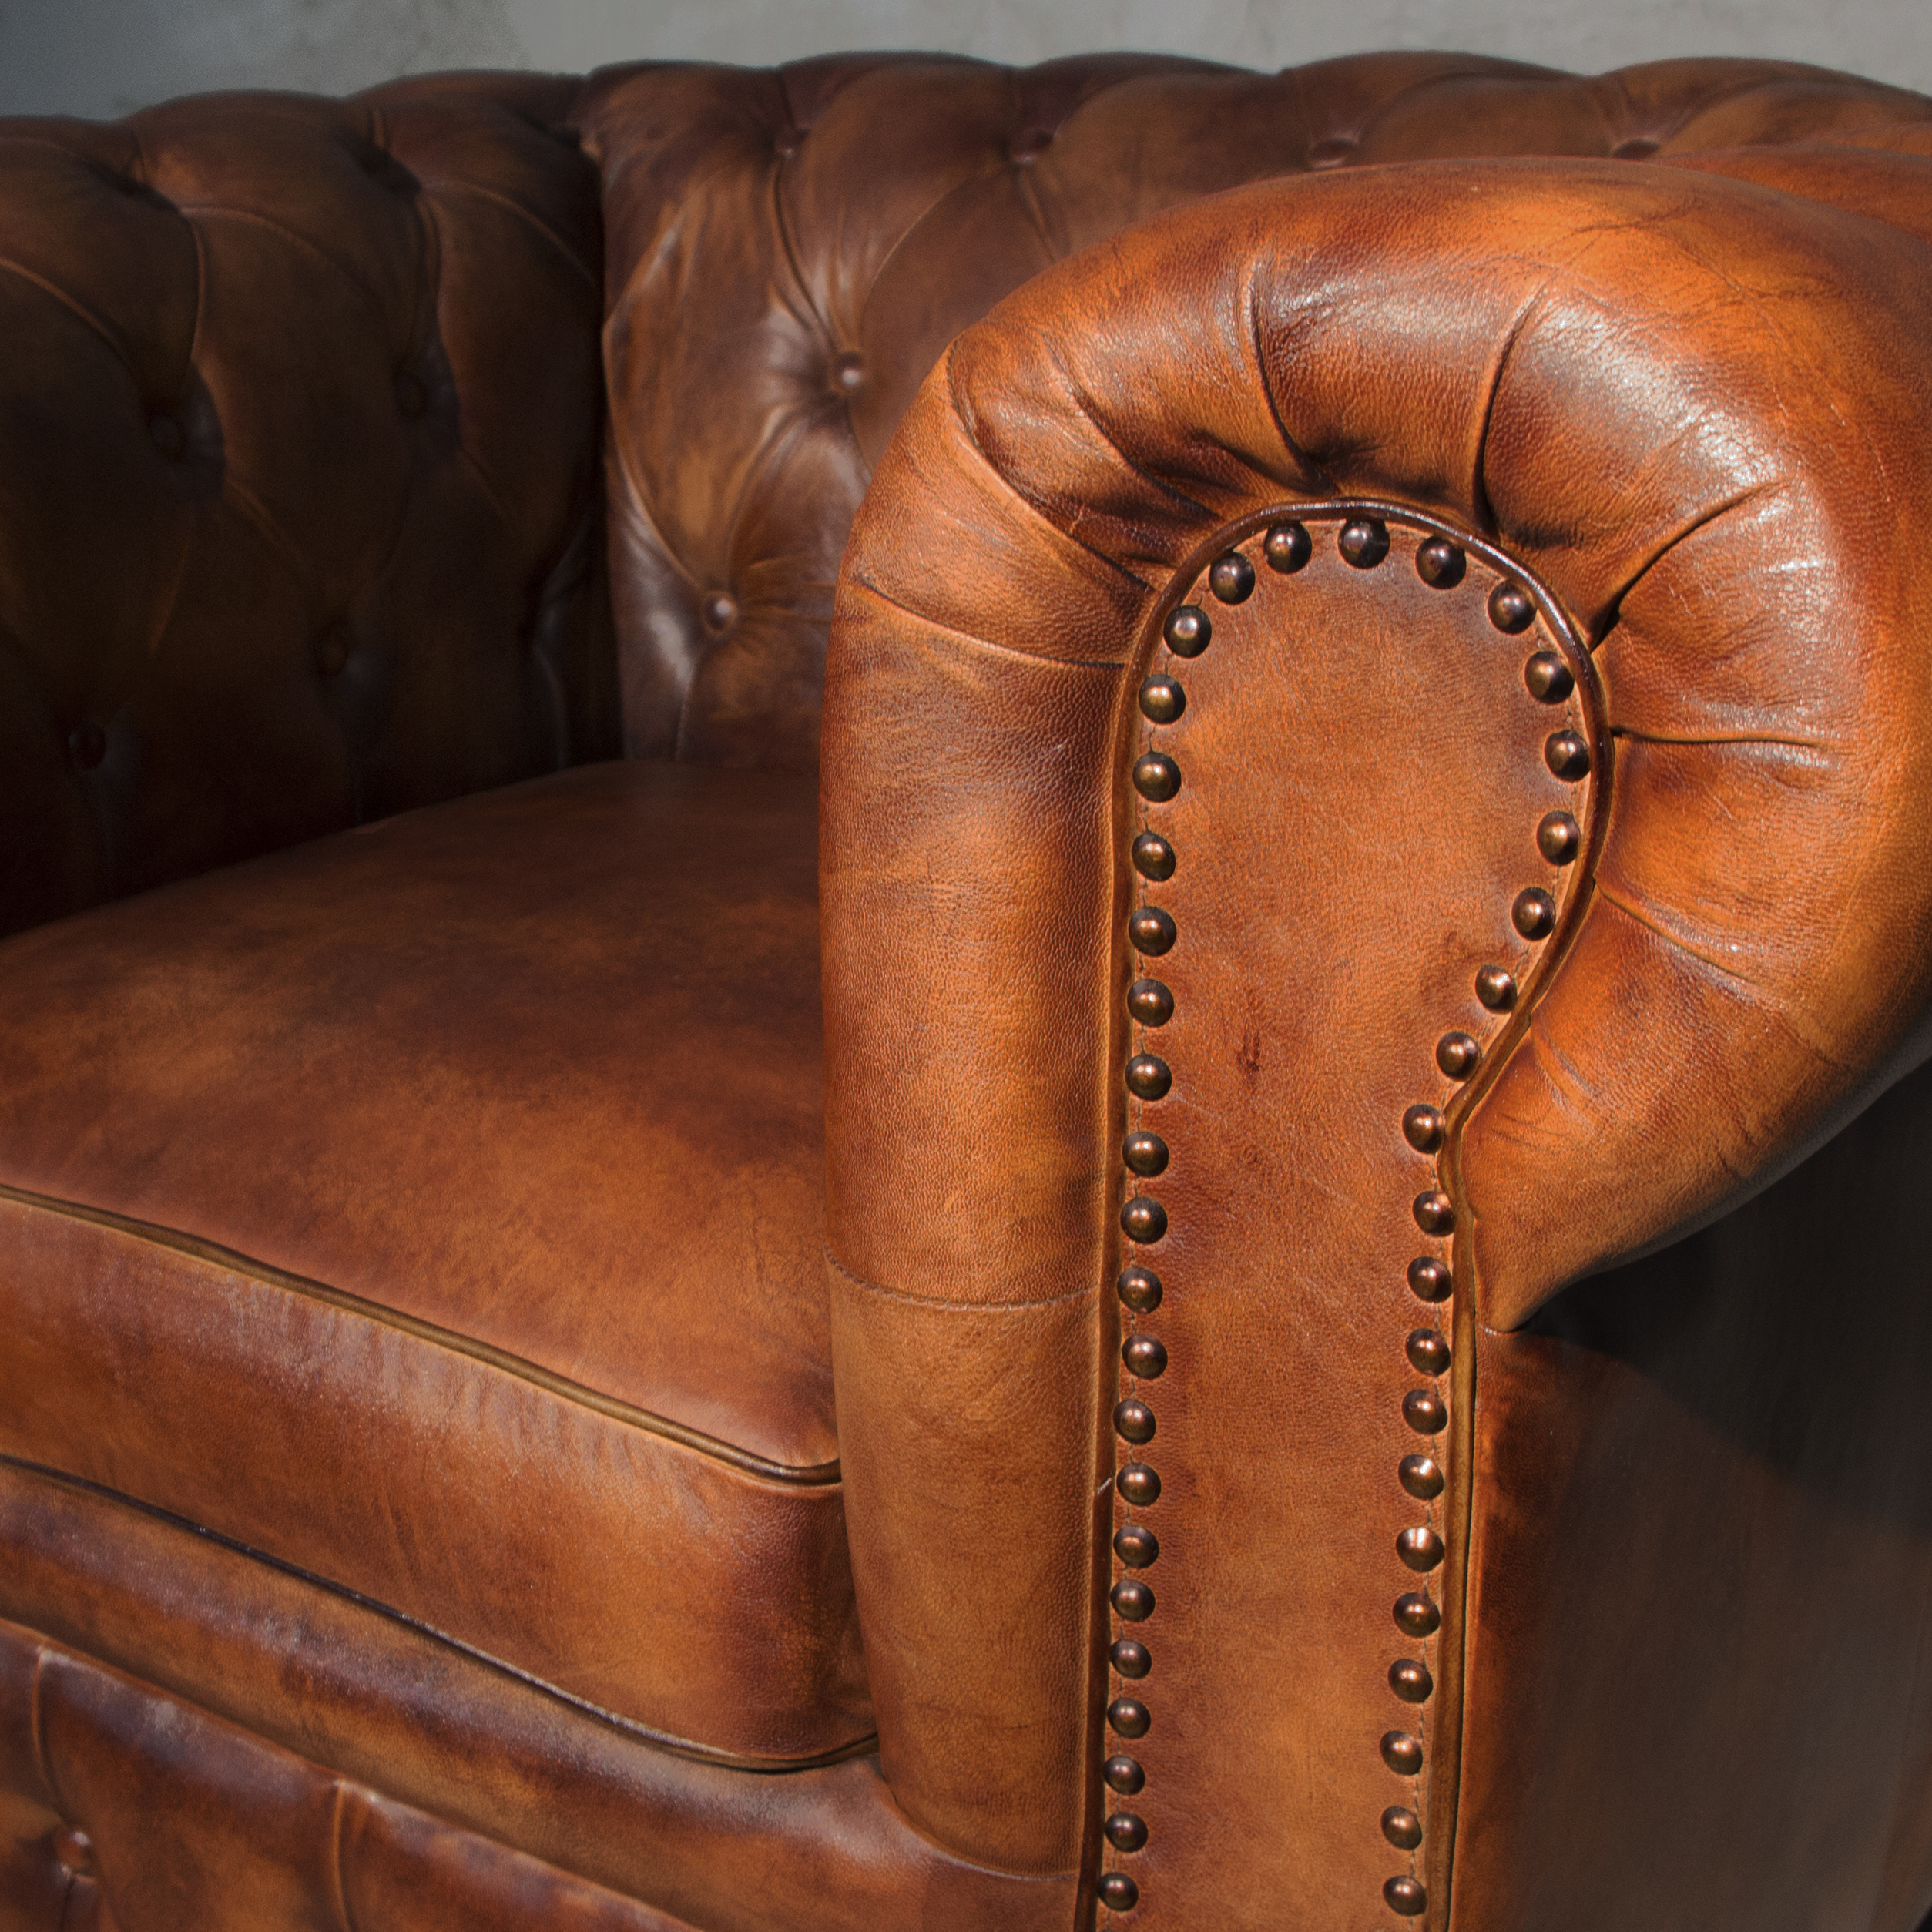 Кресло кожаное Gandy Chester, размер 110х90х75 см (KH01652)KH01652